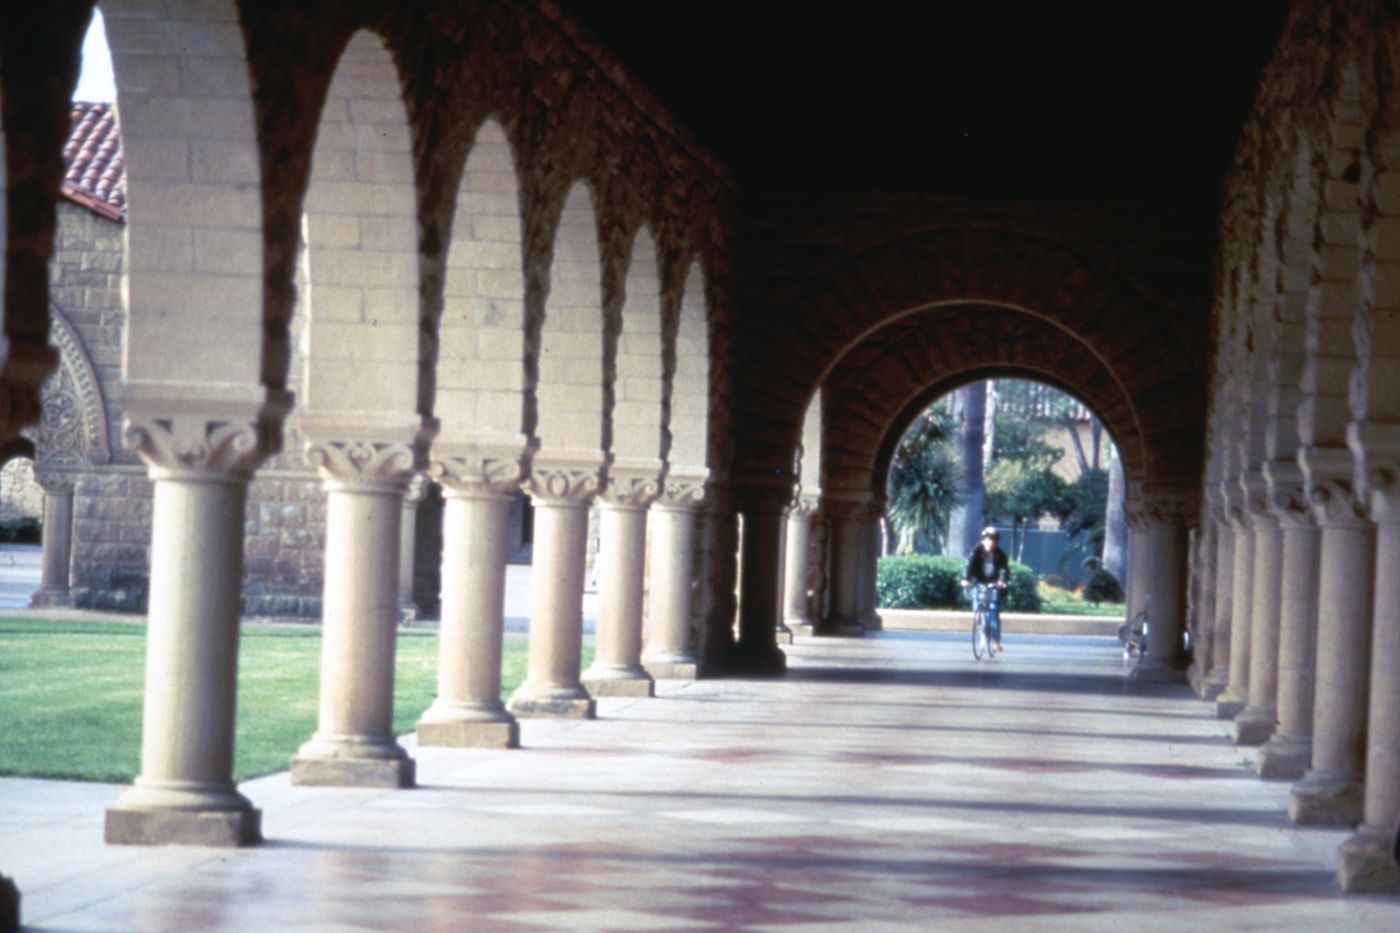 Photograph of Stanford University for research for Olmsted: L'origine del parco urbano e del parco naturale contemporaneo